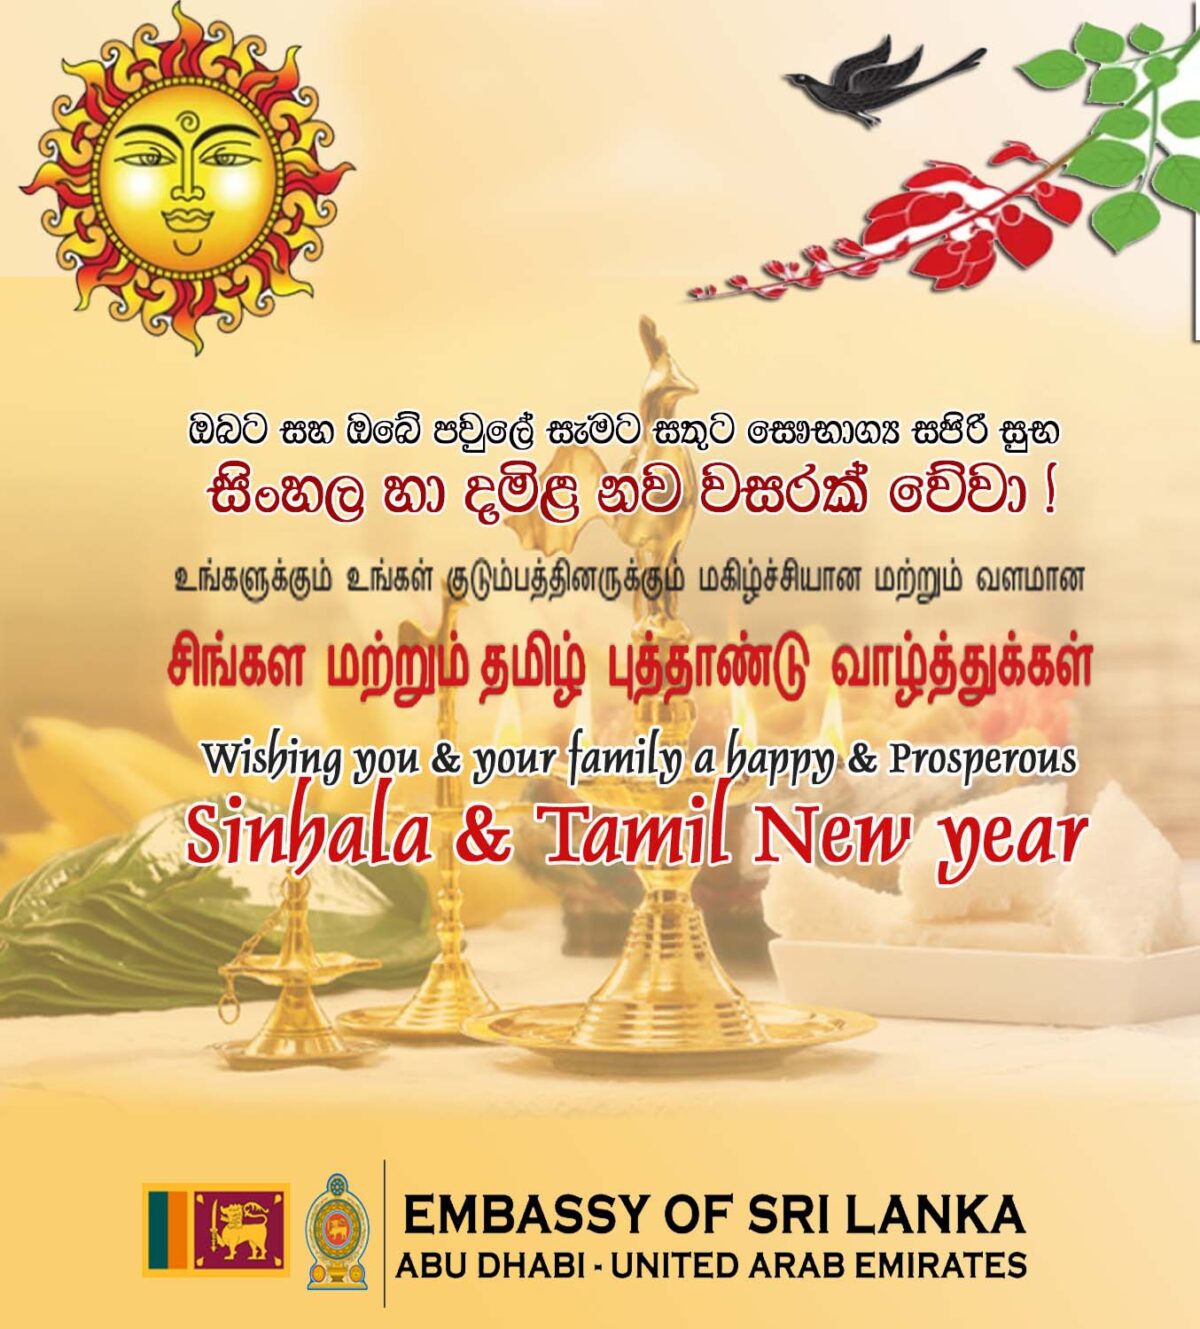 wishes for Happy Sinhala & Tamil New year Embassy of Sri Lanka UAE